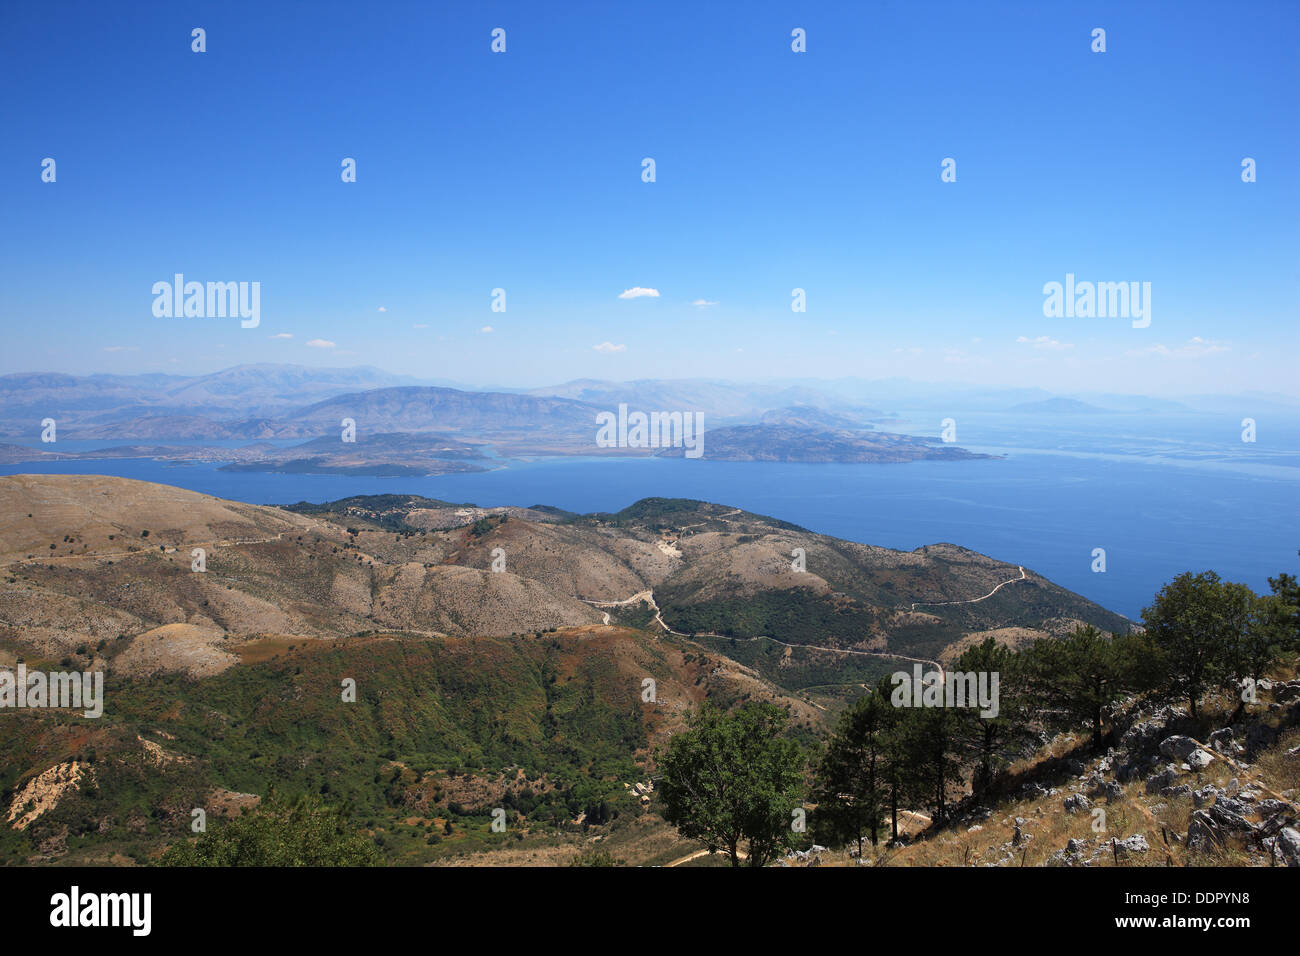 View towards Albania from the summit of Mount Pantokrator in Corfu Greece Stock Photo